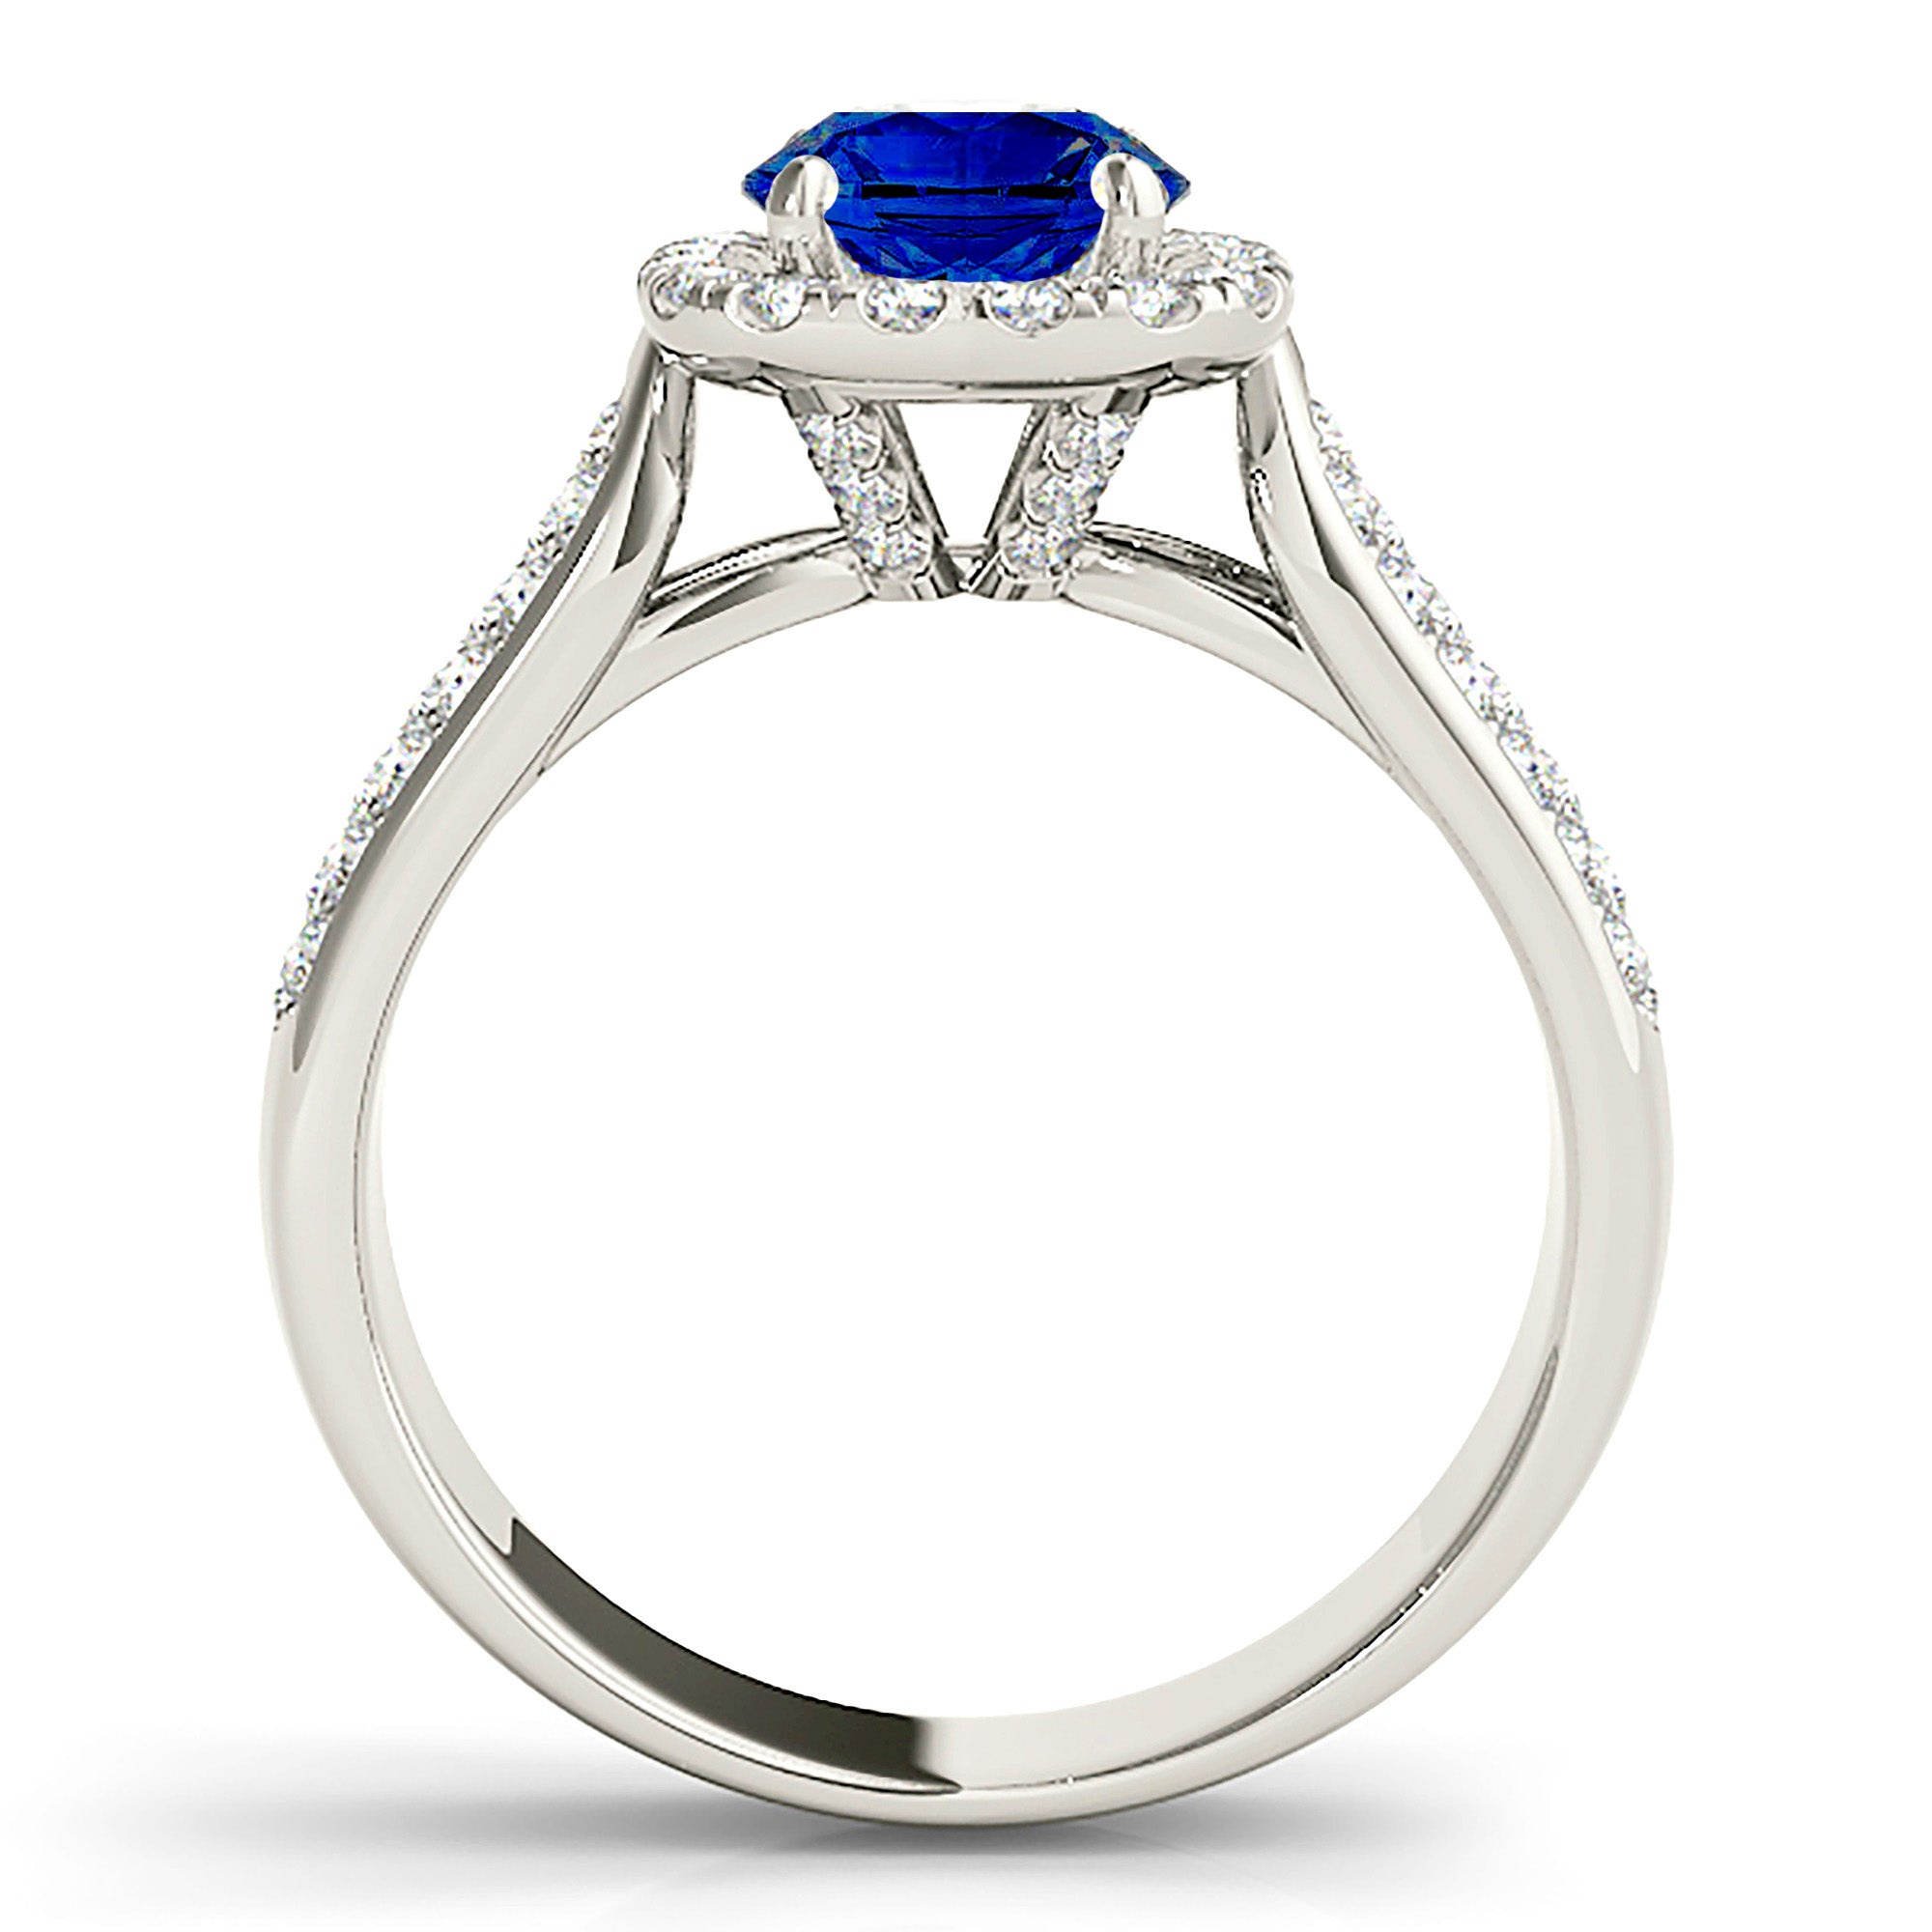 1.35 ct. Genuine Blue Round Sapphire Ring With 0.75 ctw. Diamond Cushion Halo, Triple Row Diamond Band | Natural Sapphire And Diamond Ring-in 14K/18K White, Yellow, Rose Gold and Platinum - Christmas Jewelry Gift -VIRABYANI